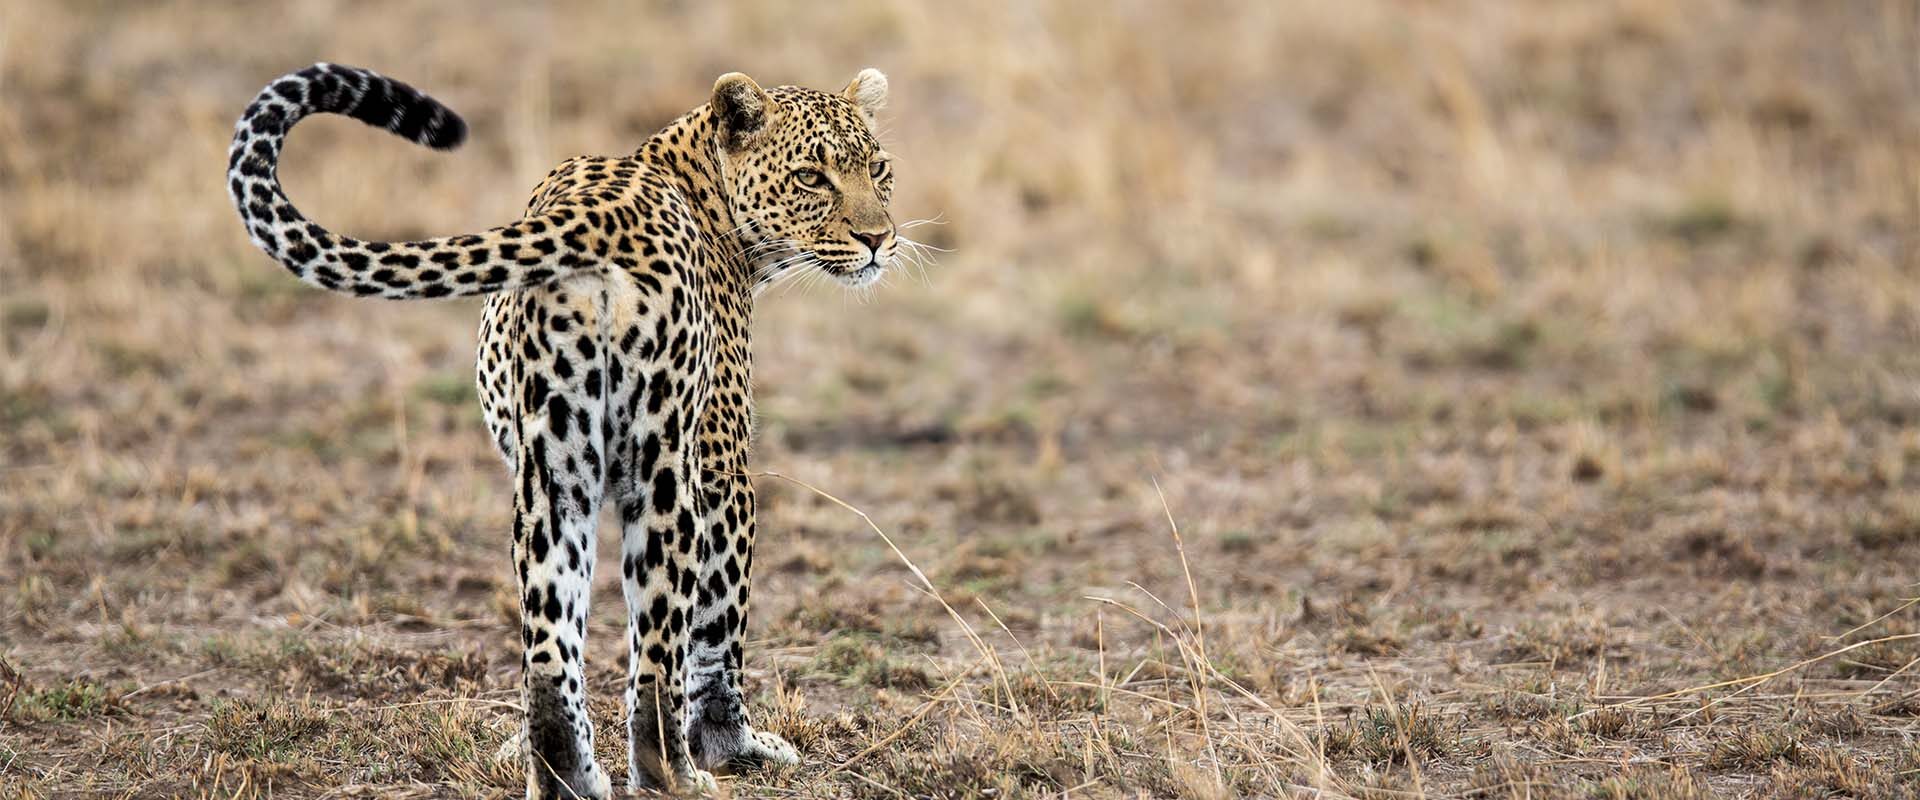 cheetah walking around in Tanzania